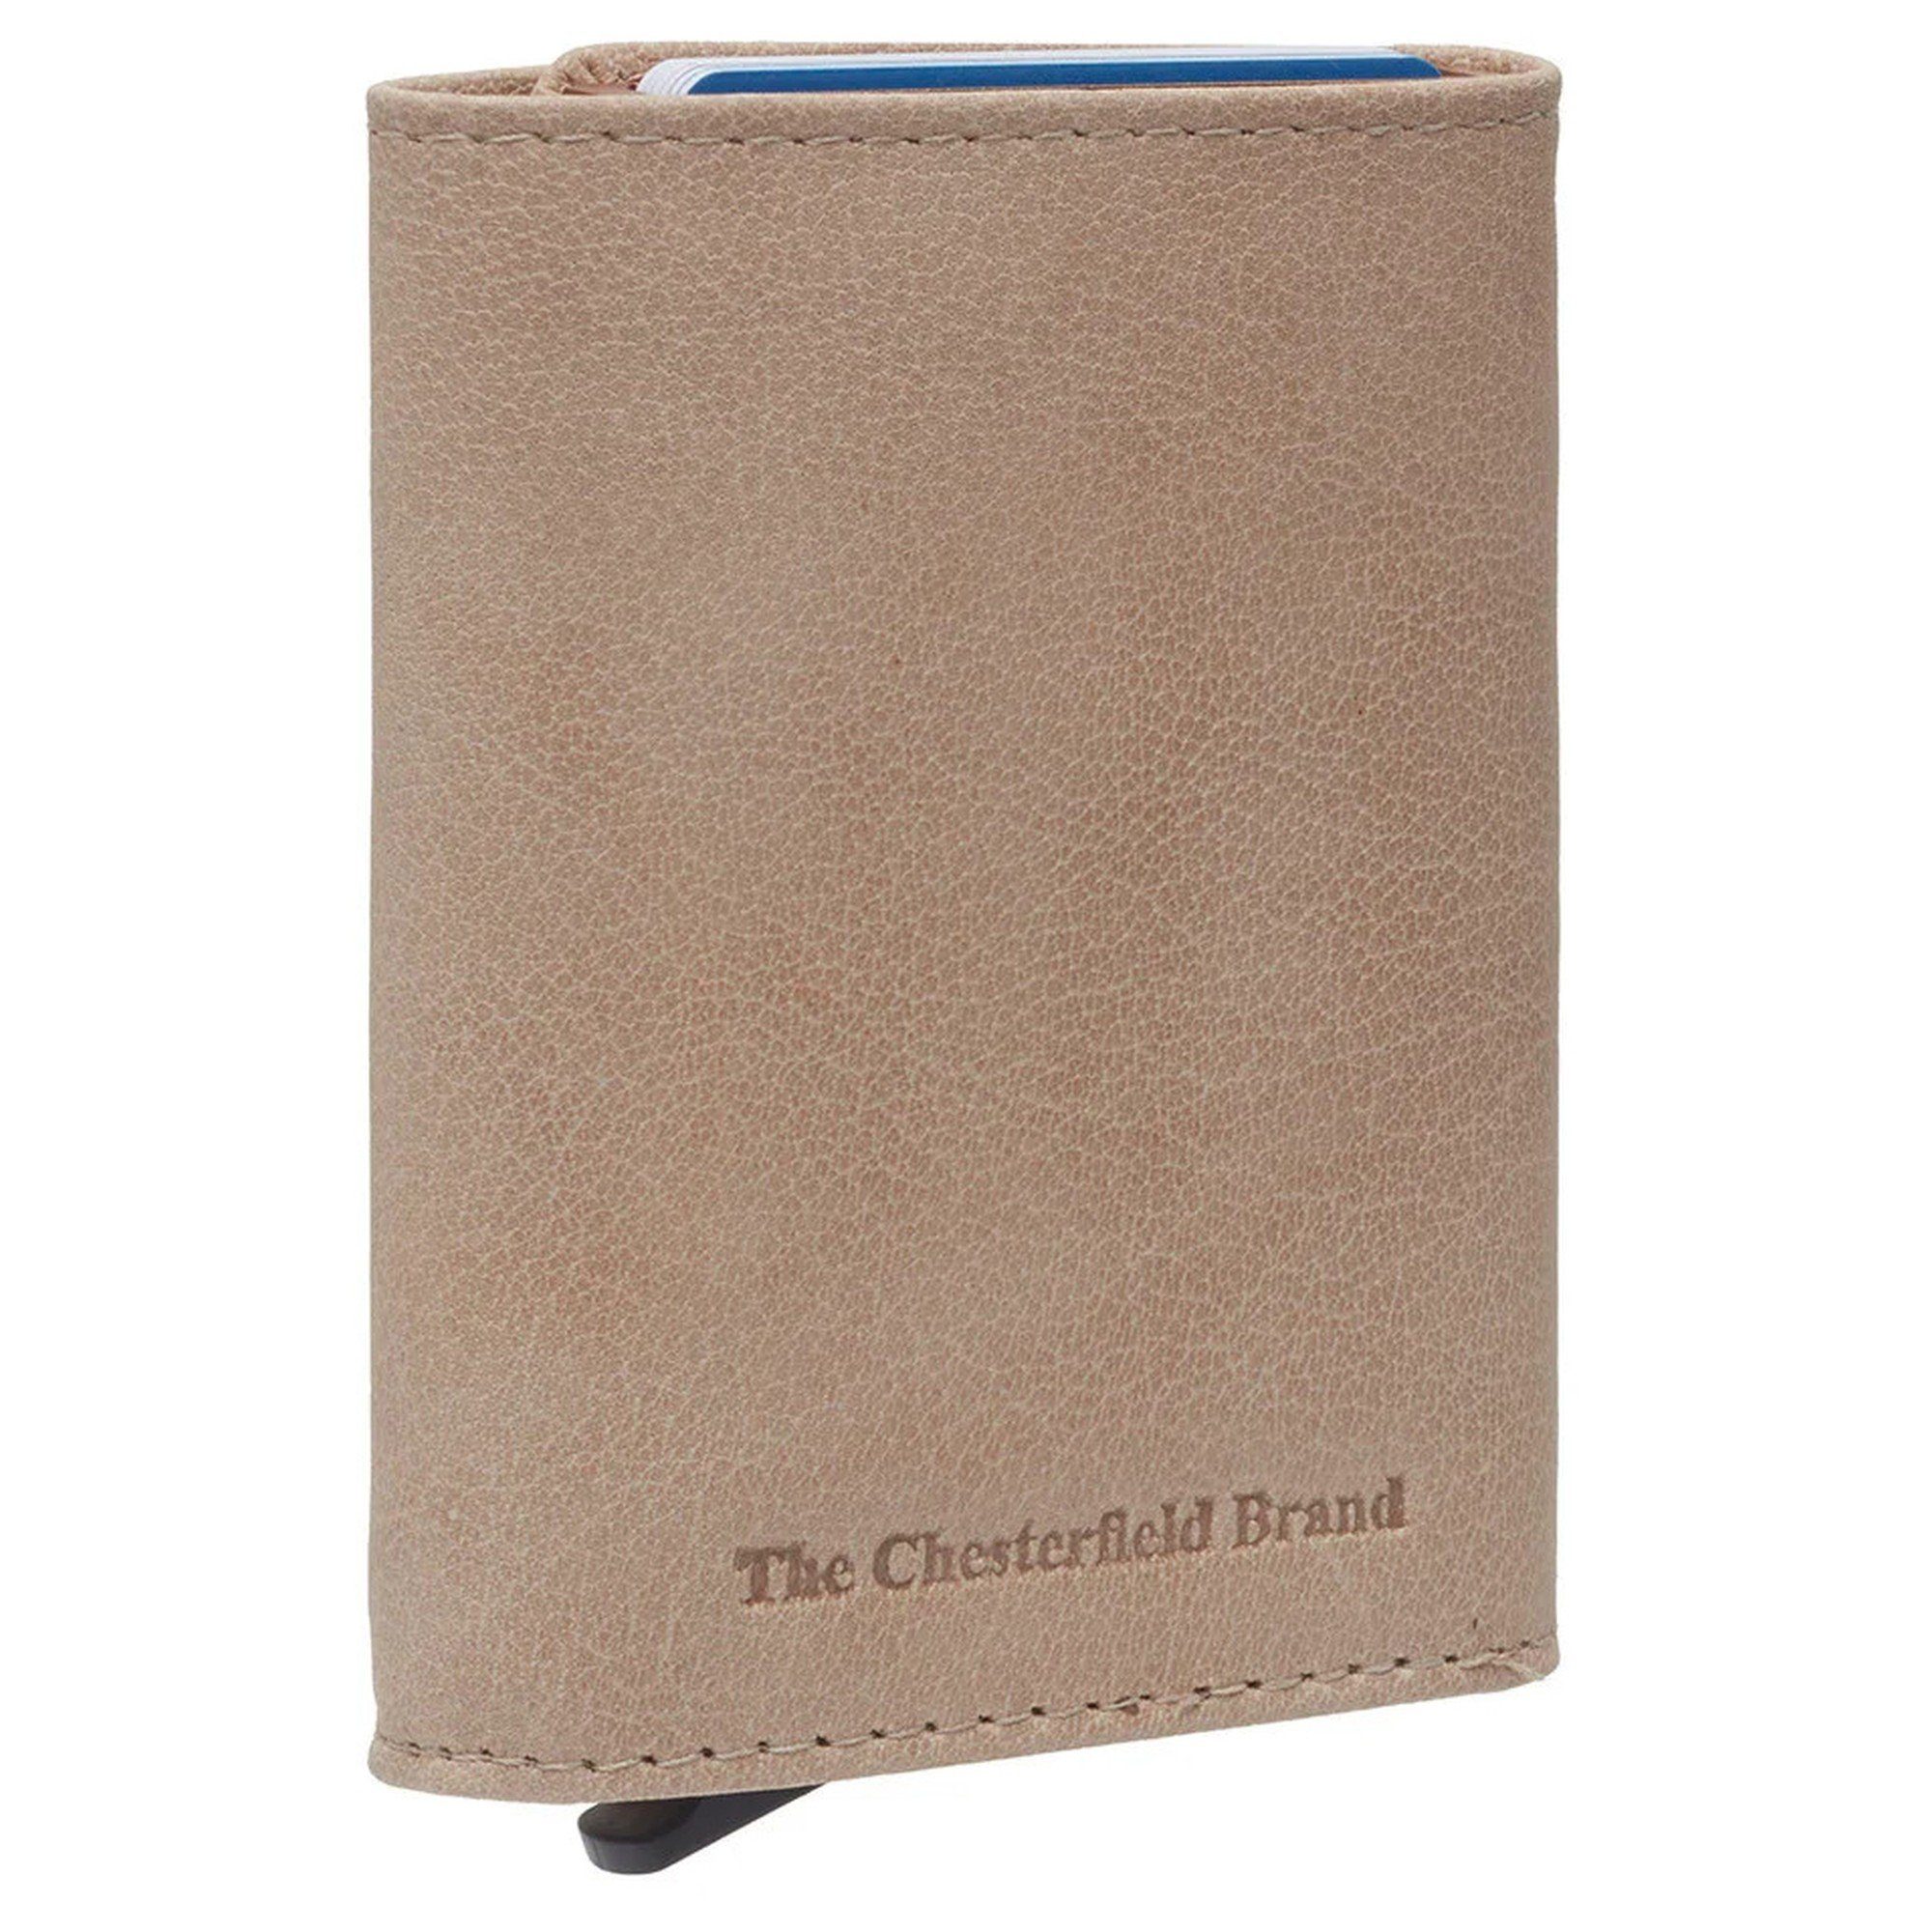 The Chesterfield Brand Paris off - 6cc 10 cm Geldbörse white RFID Kreditkartenetui (1-tlg)